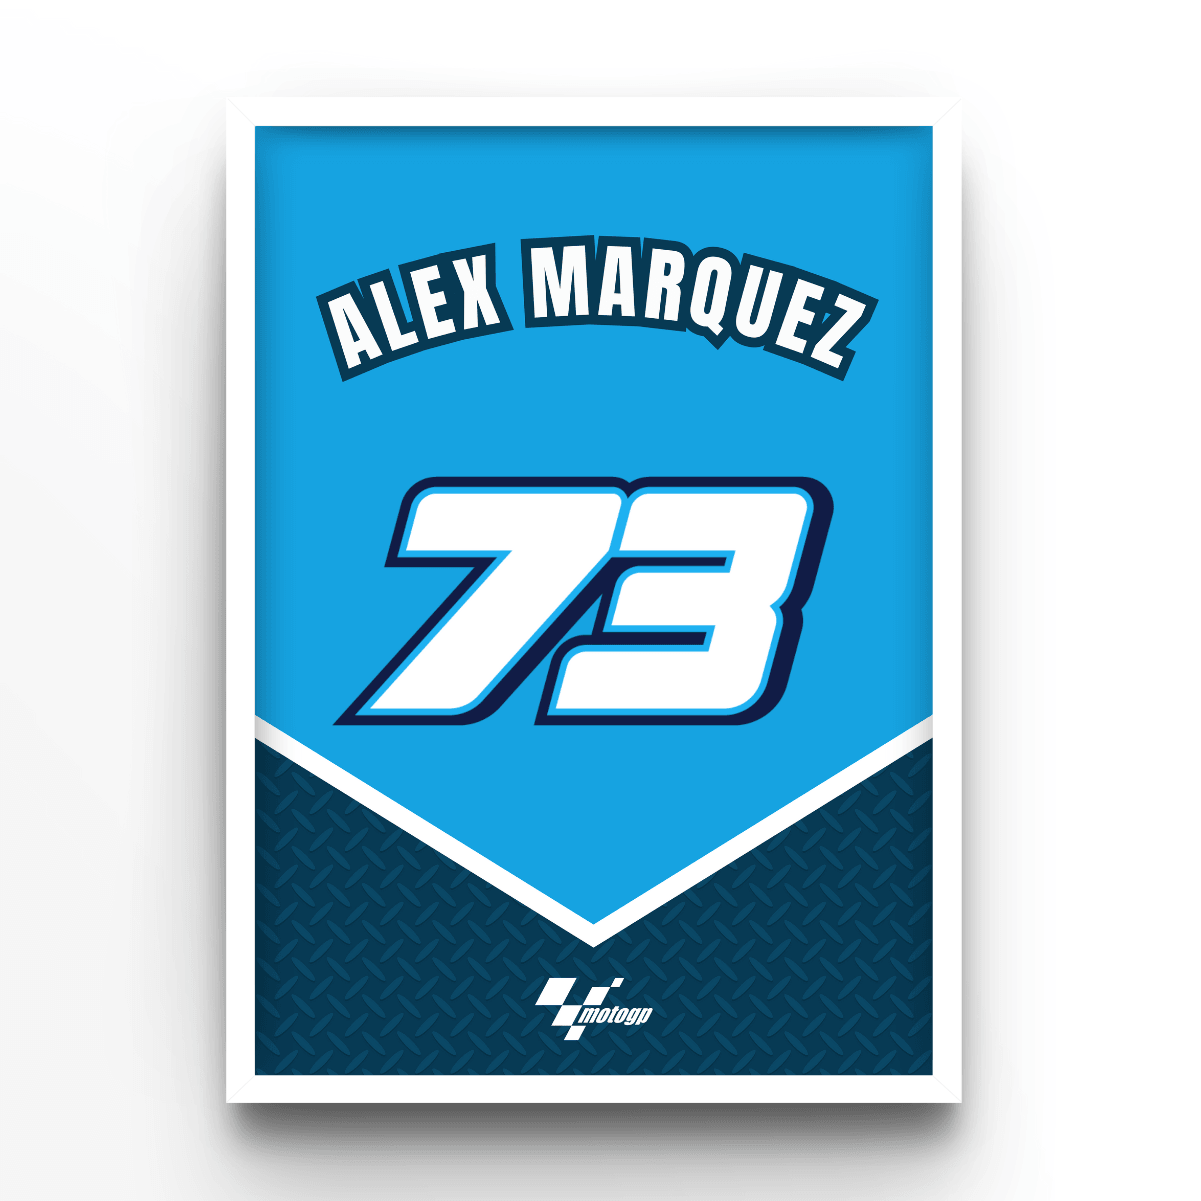 Alex Marquez - A4, A3, A2 Posters Base - Poster Print Shop / Art Prints / PostersBase